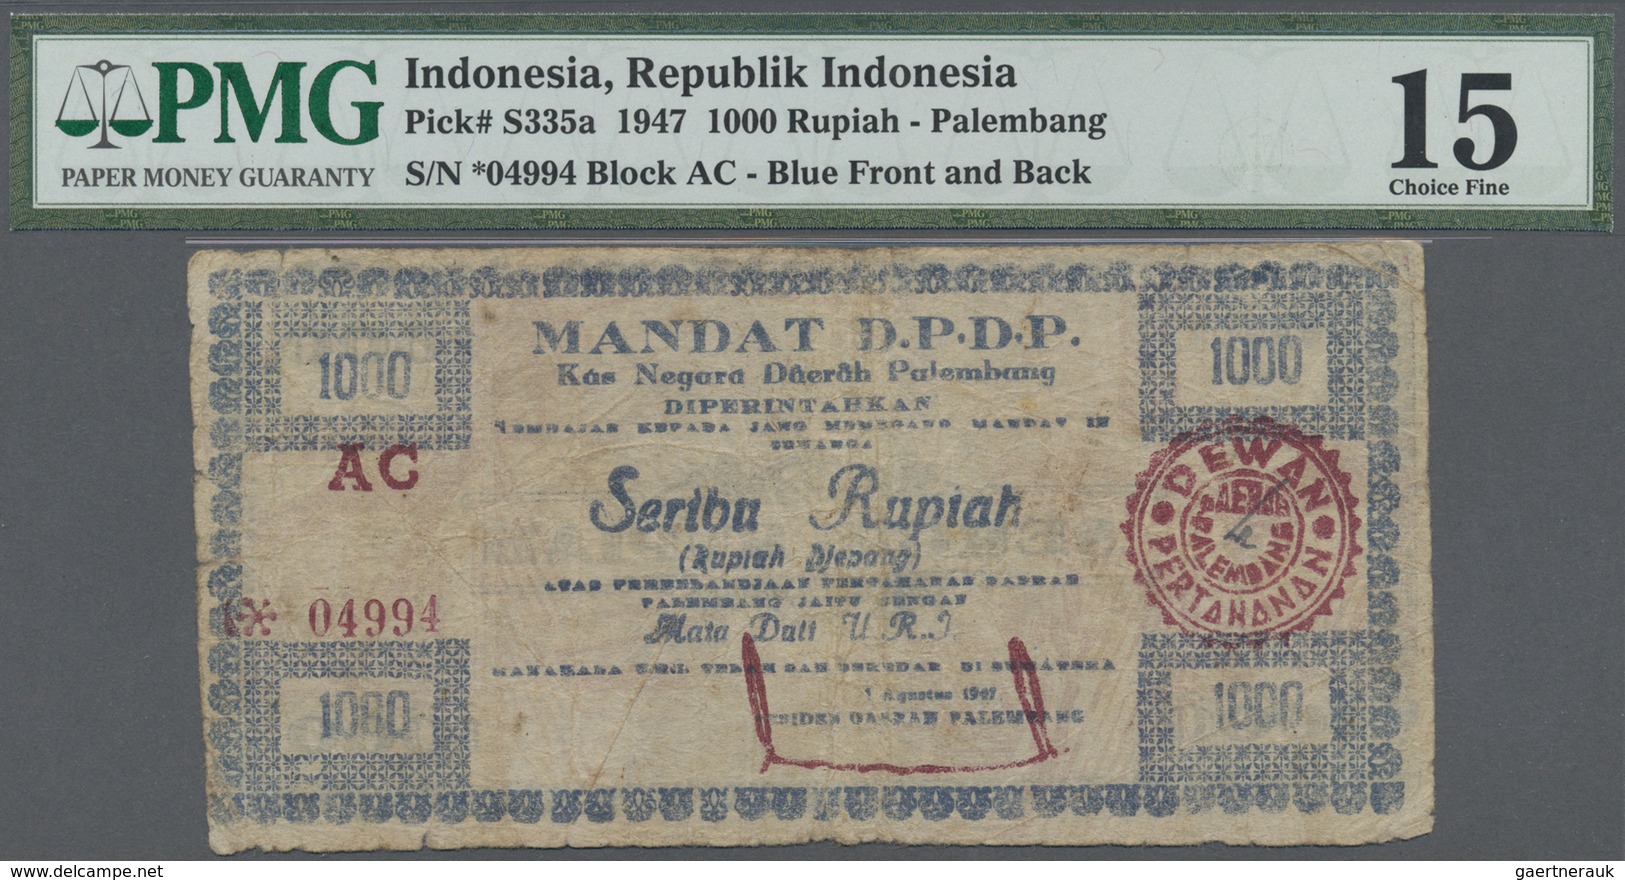 Indonesia / Indonesien: Kas Negara Daerah (Governmental Treasury), Palembang 1000 Rupiah 1947, P.S33 - Indonesia